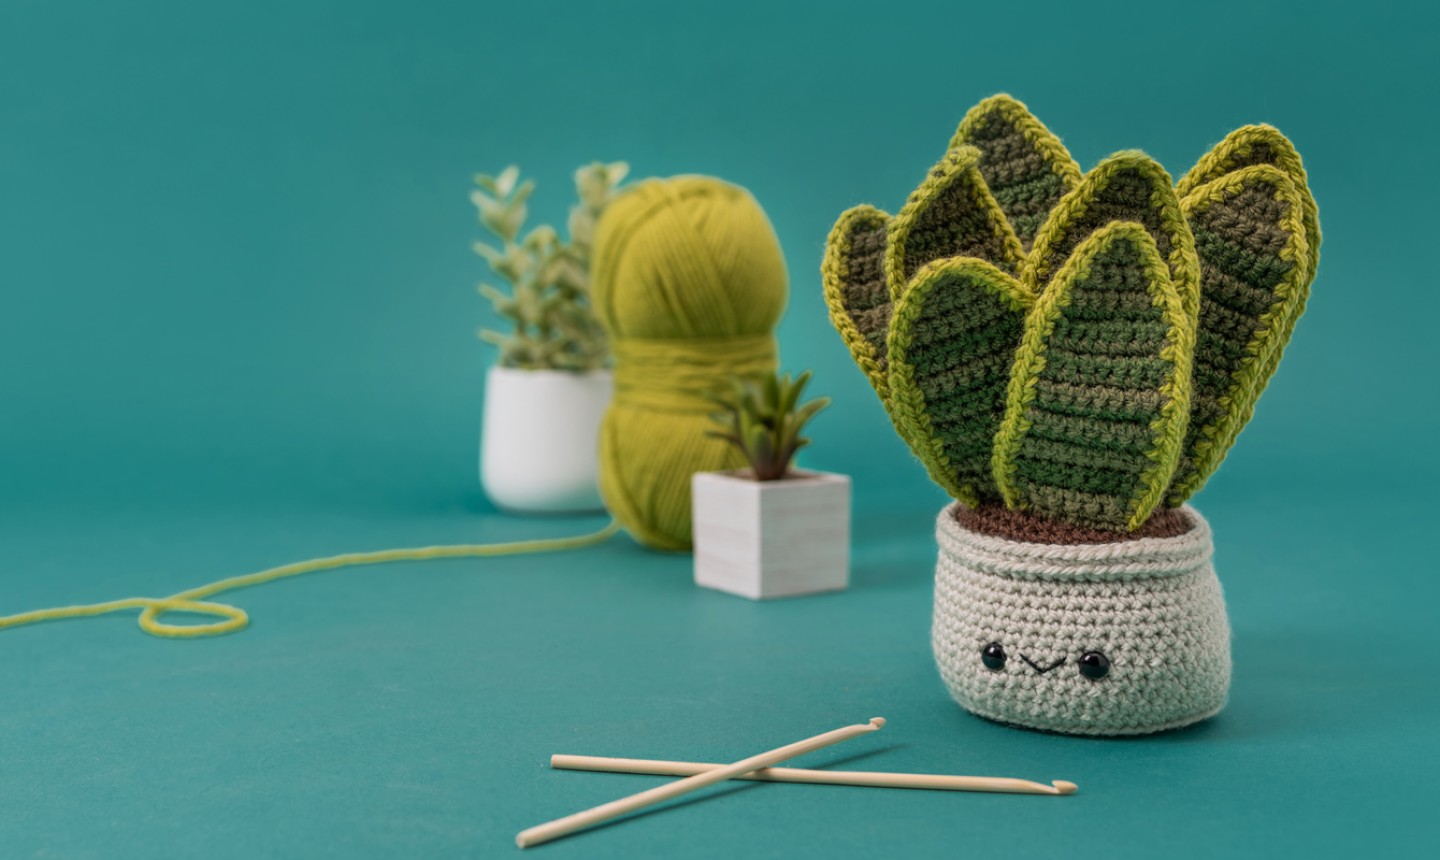 Crochet plant